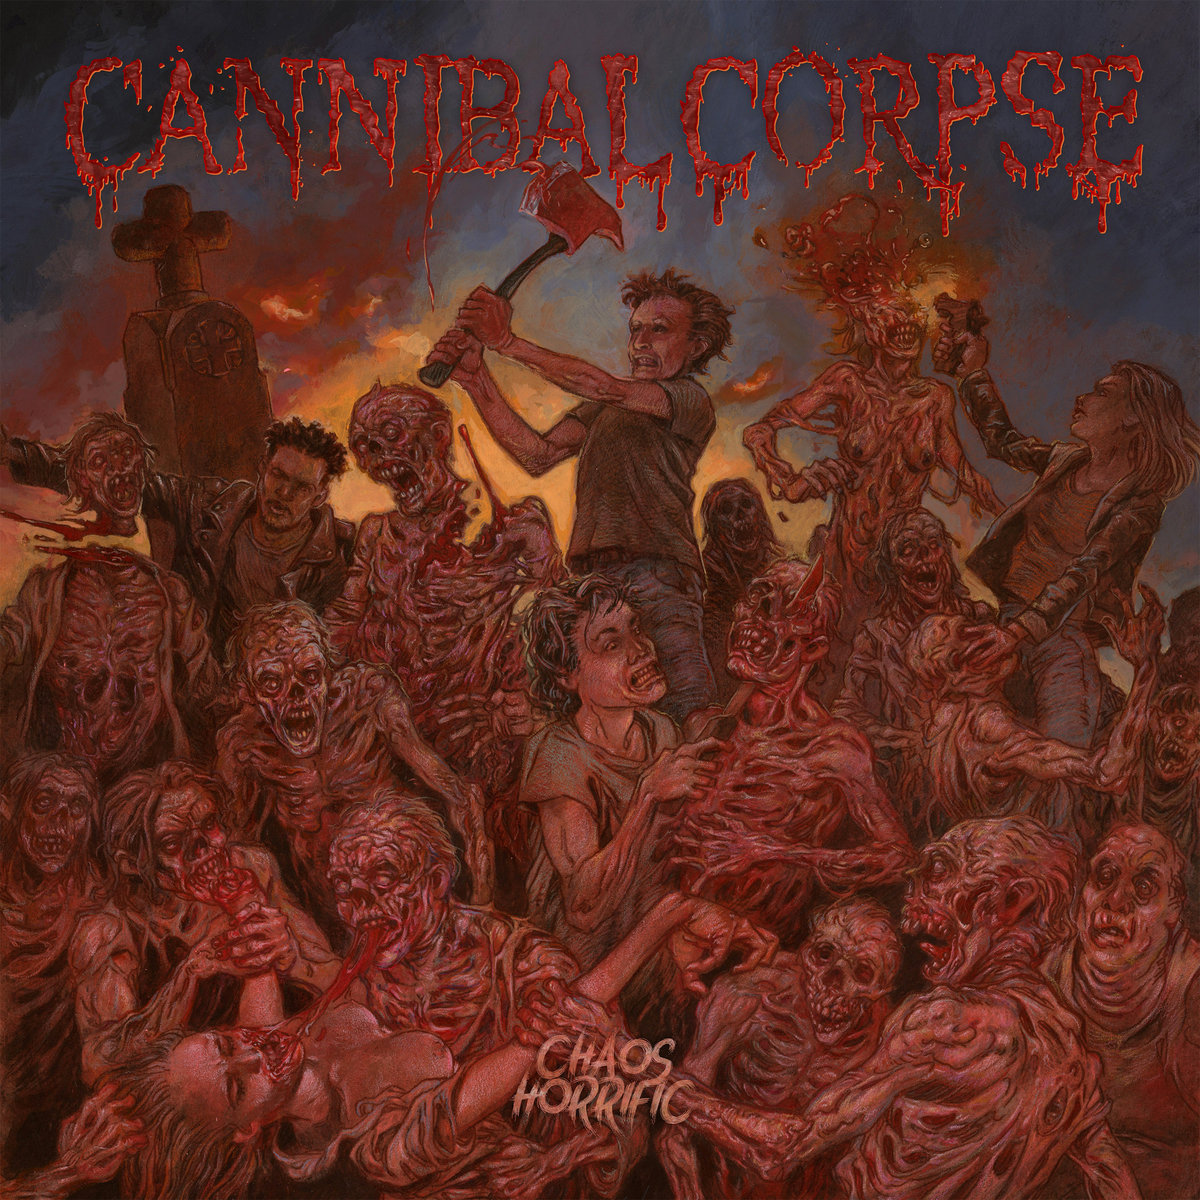 CANNIBAL-CORPSE-Chaos-Horrific-Vinyl-LP-burned-flesh-marble